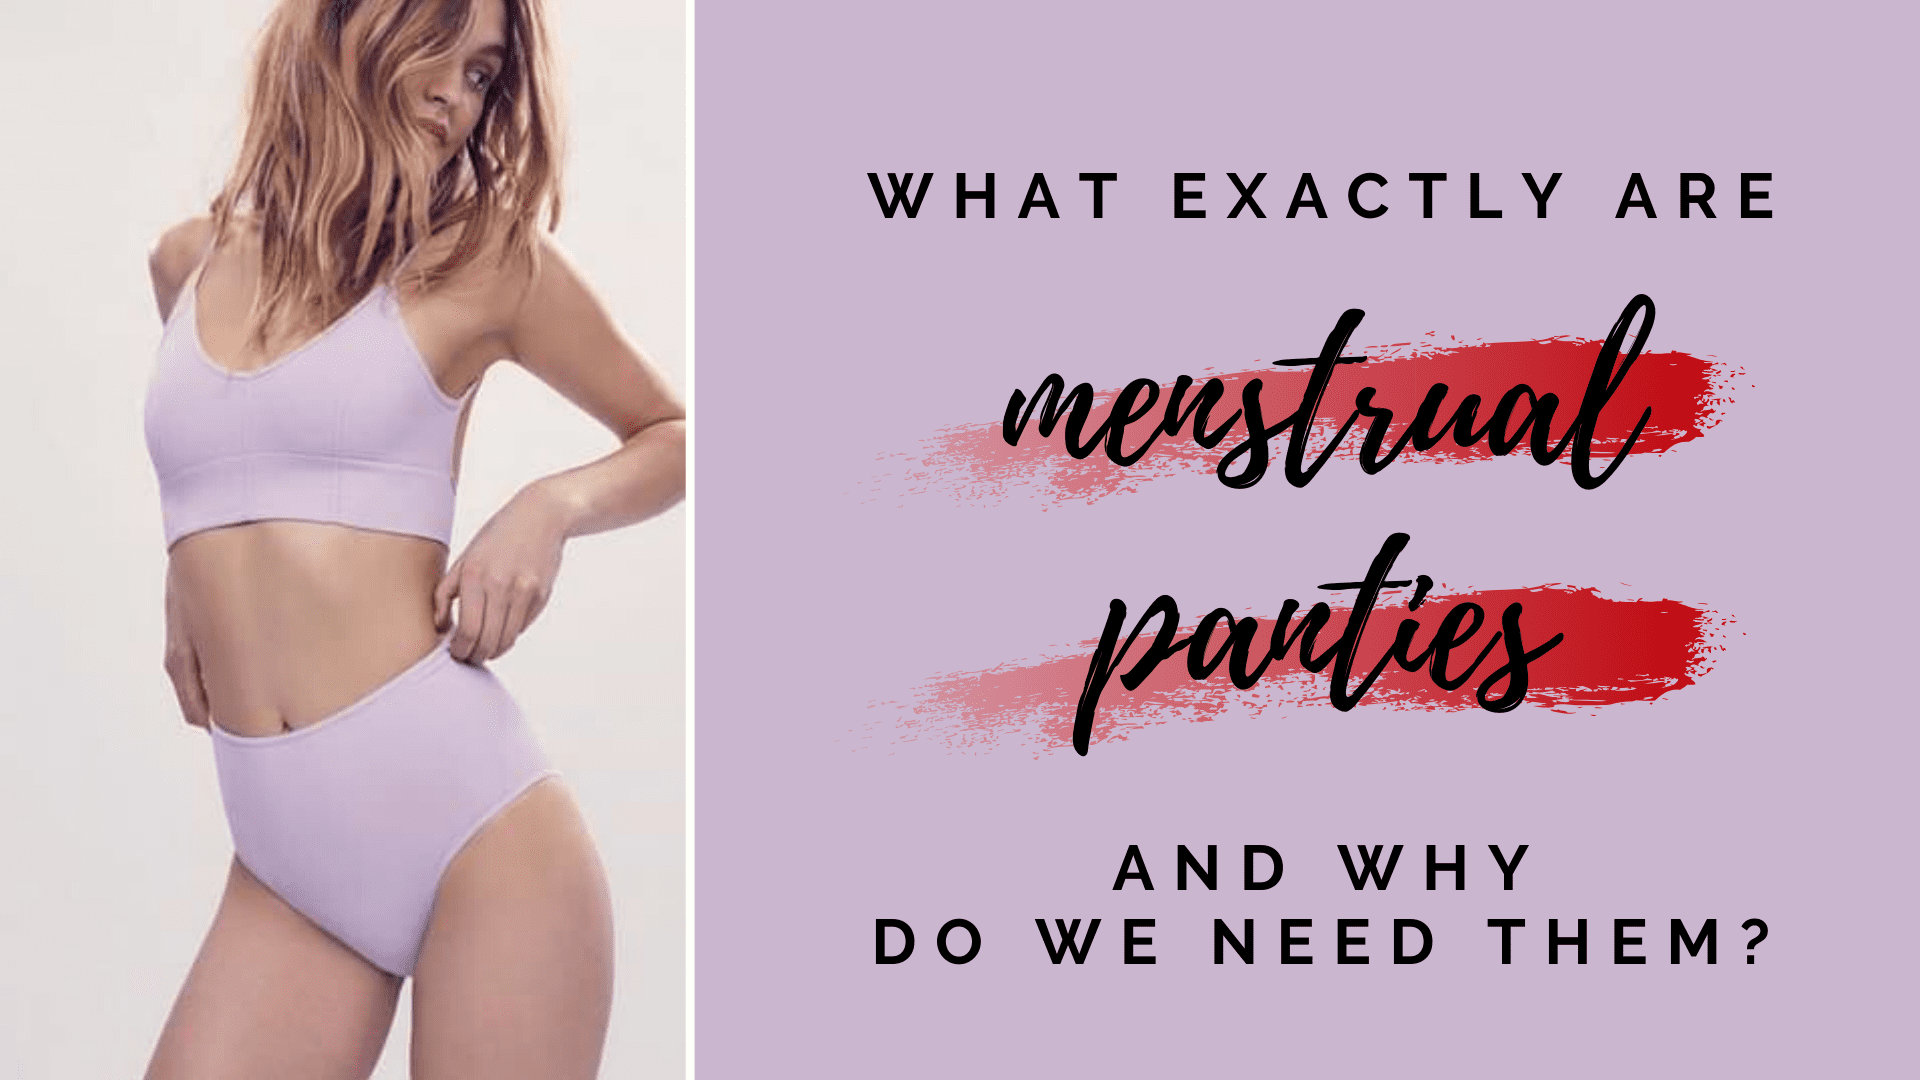 What are menstrual panties?